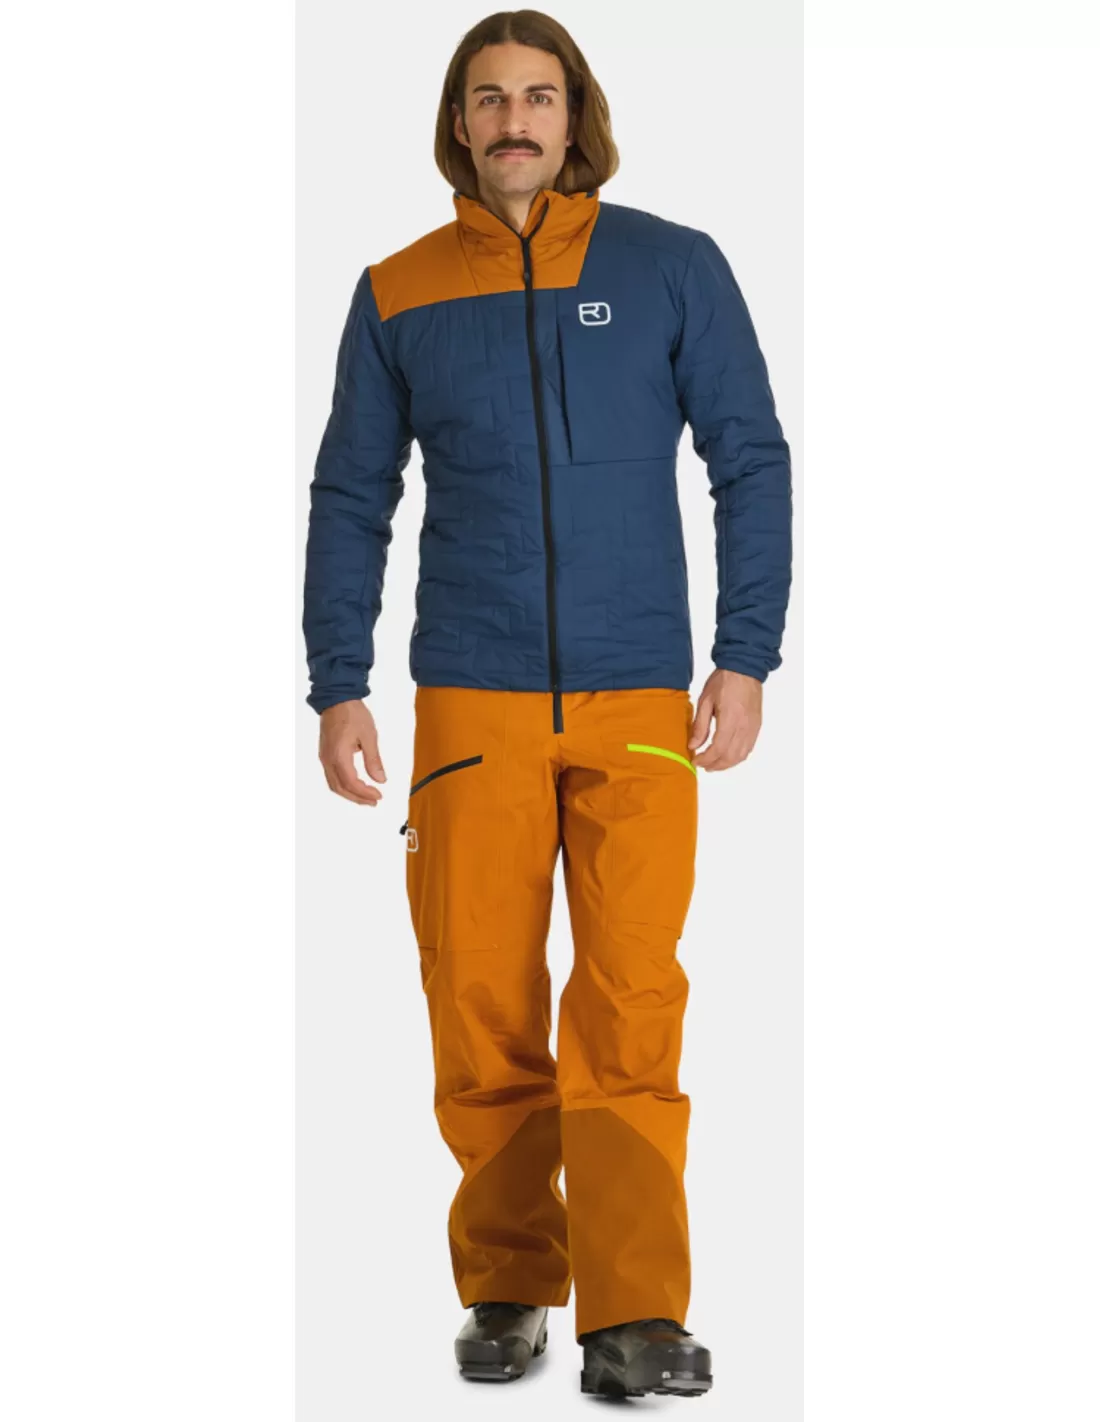 Ortovox Swisswool Piz Segnas Jacket Men´s (Maat - XL, Kleur - Deep-Ocean)